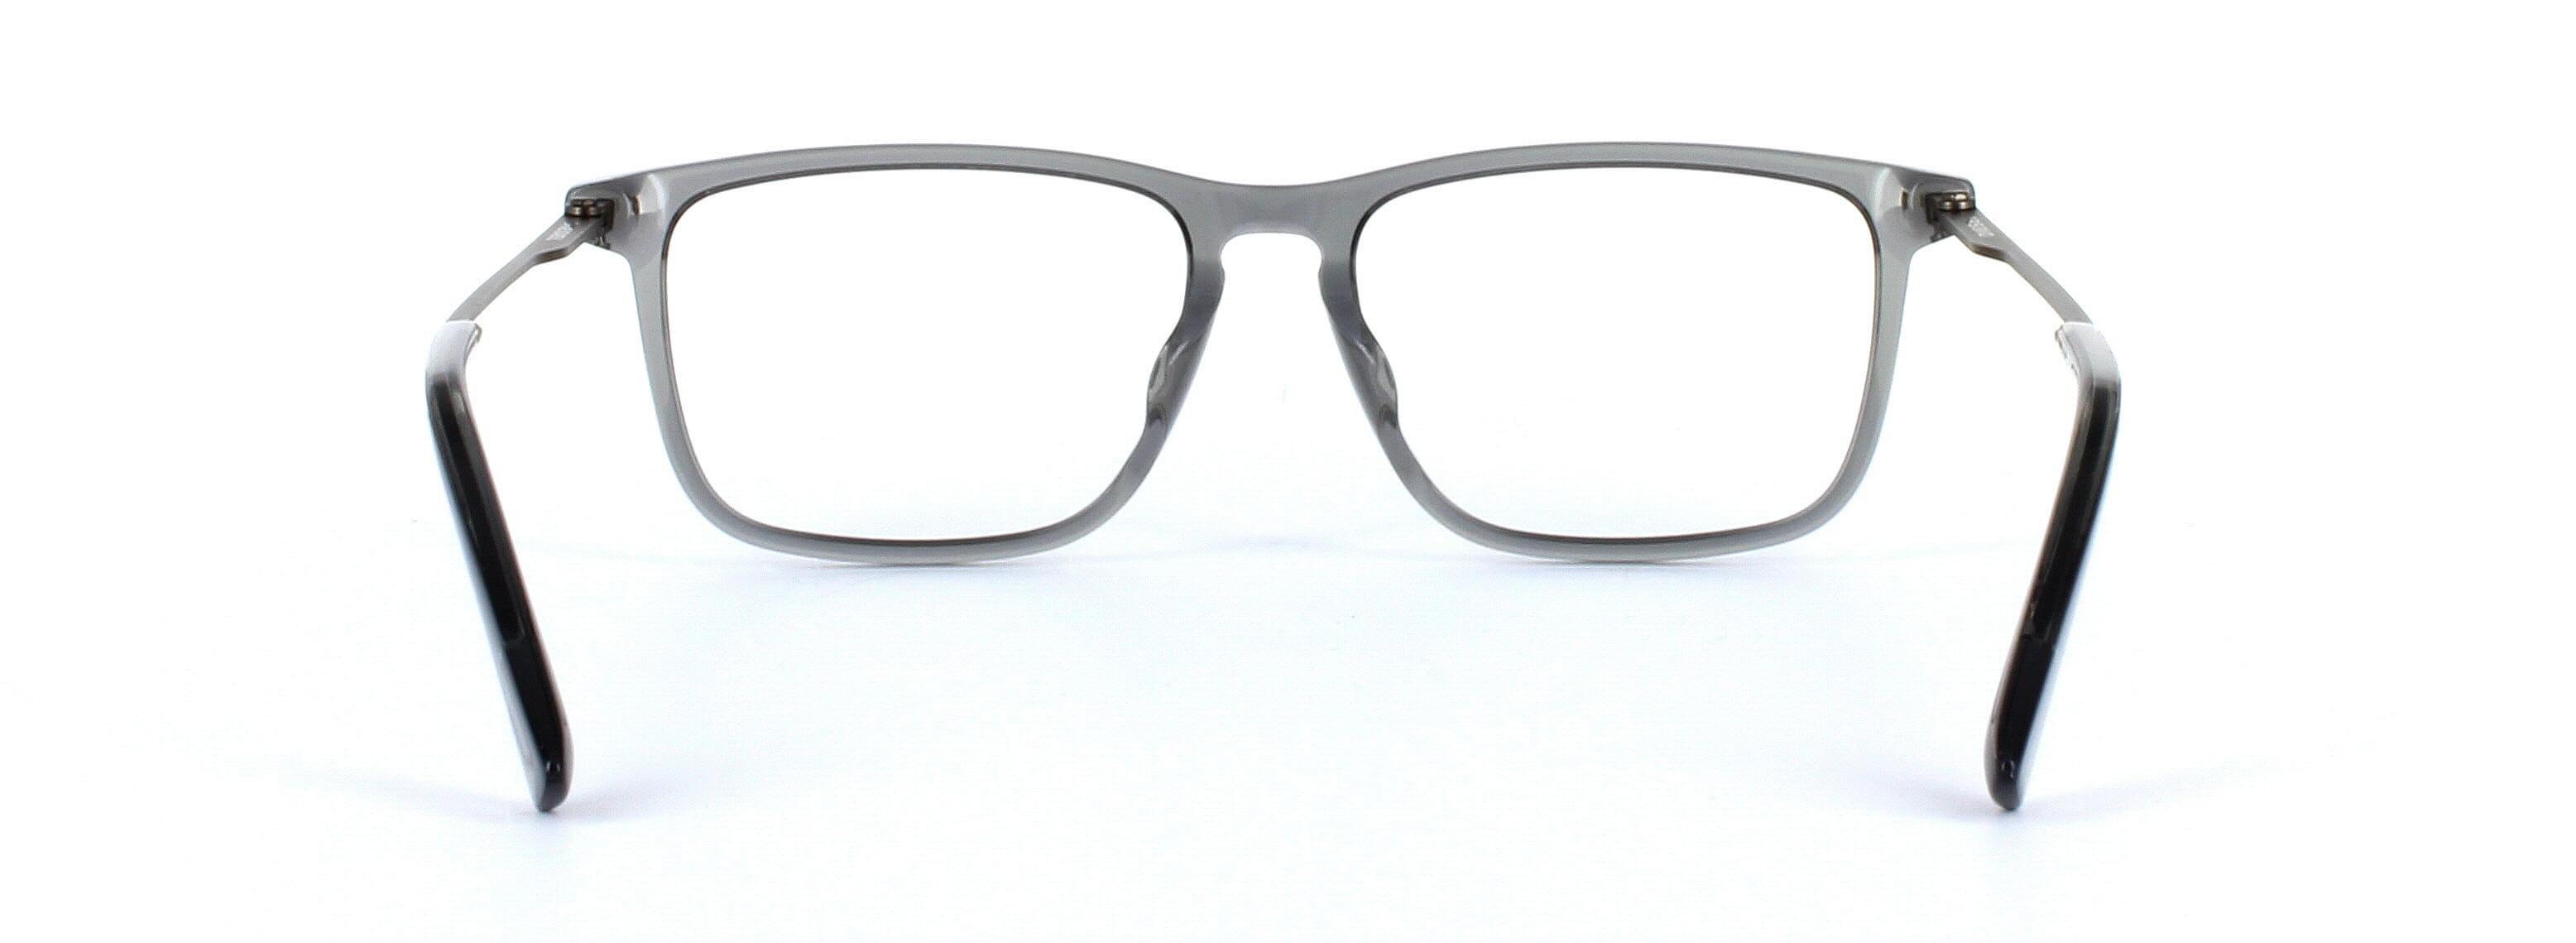 Diesel (DL5337-020) Crystal Grey Full Rim Rectangular Oval Acetate Glasses - Image View 3